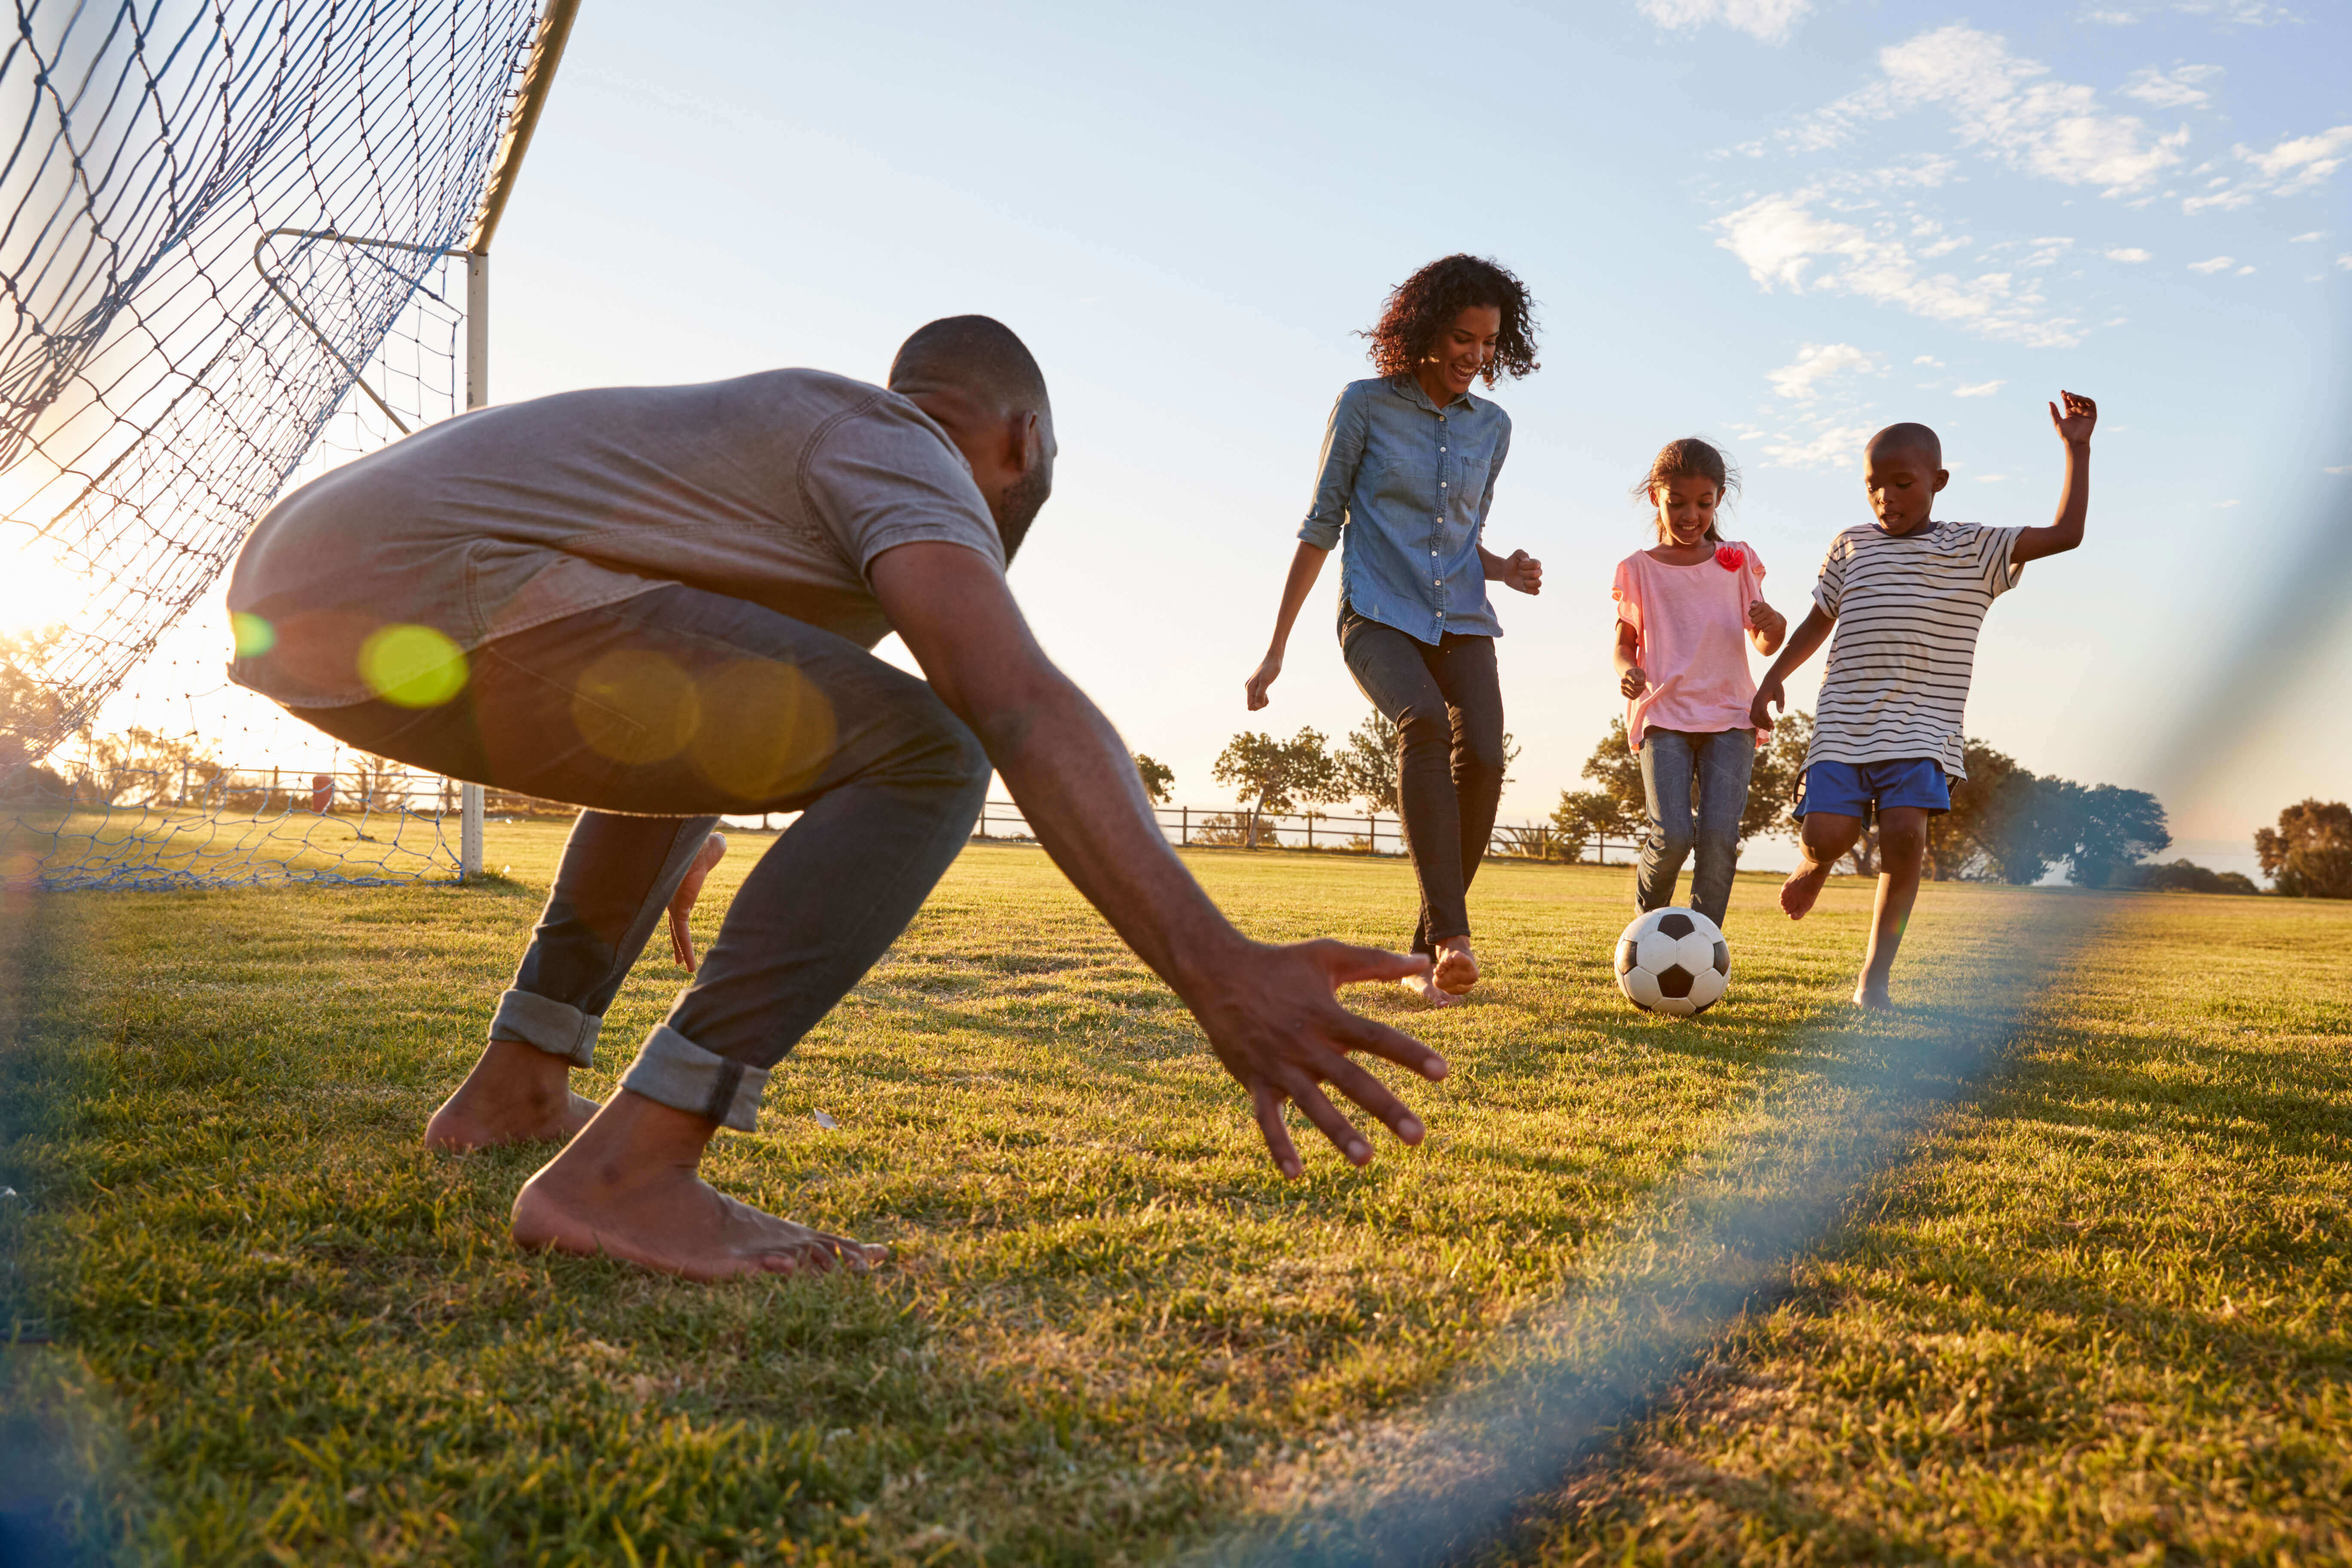 Sport can play with. Семья на футболе. Дети играют в футбол. Игра в футбол семья. Дети играющие в футбол.